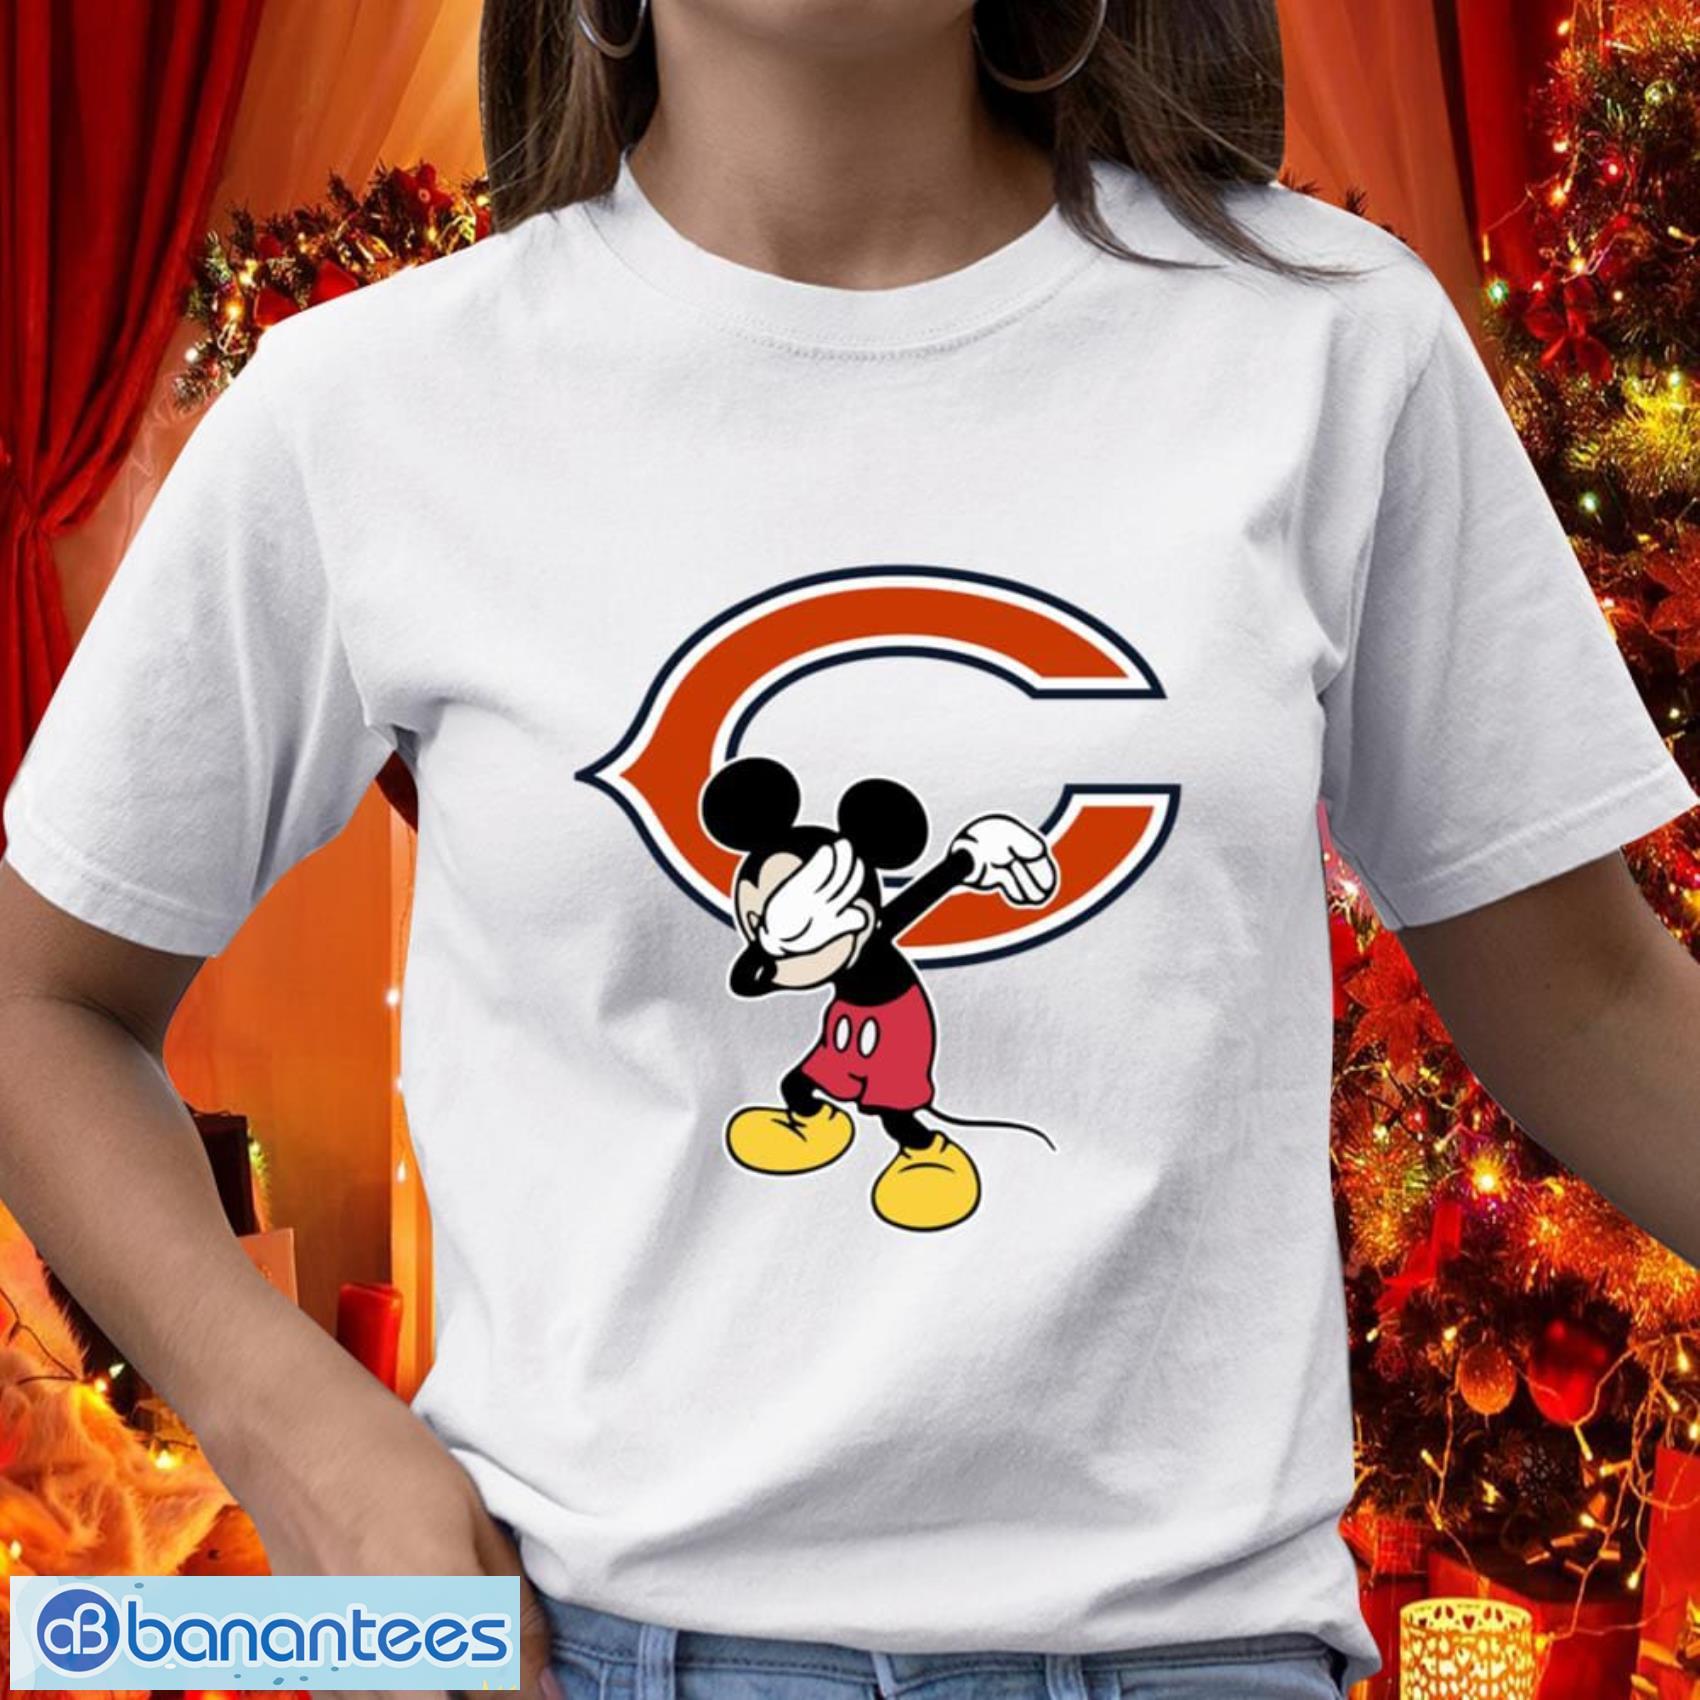 Chicago Bears NFL Football Gift Fr Fans Dabbing Mickey Disney Sports T Shirt - Chicago Bears NFL Football Dabbing Mickey Disney Sports T Shirt_1